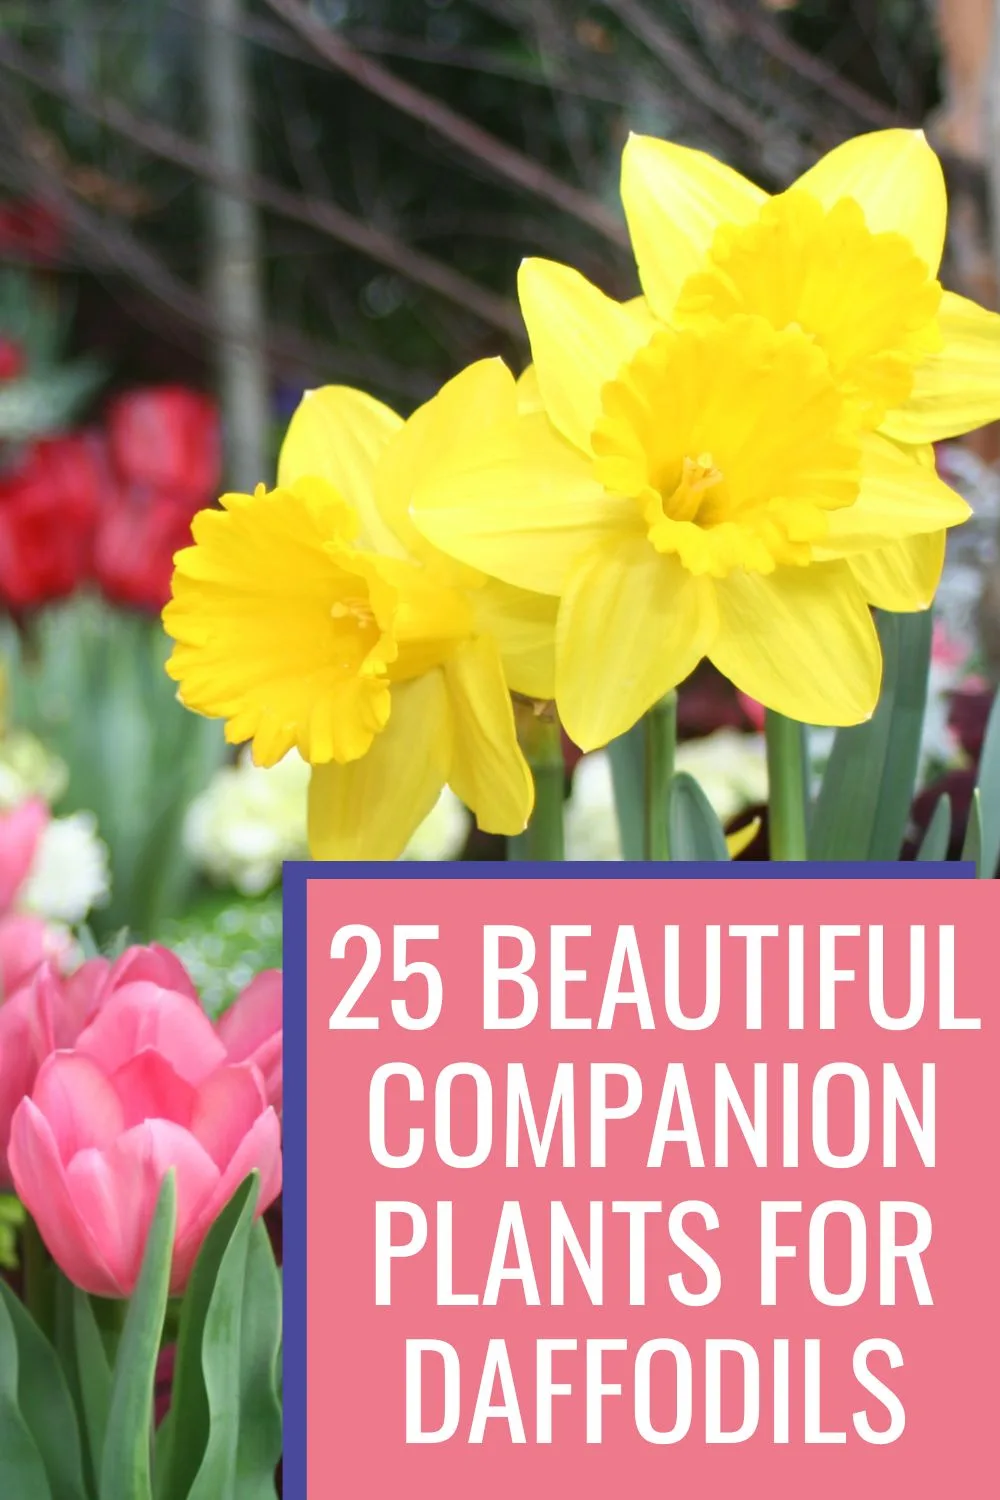 25 beautiful companion plants for daffodils